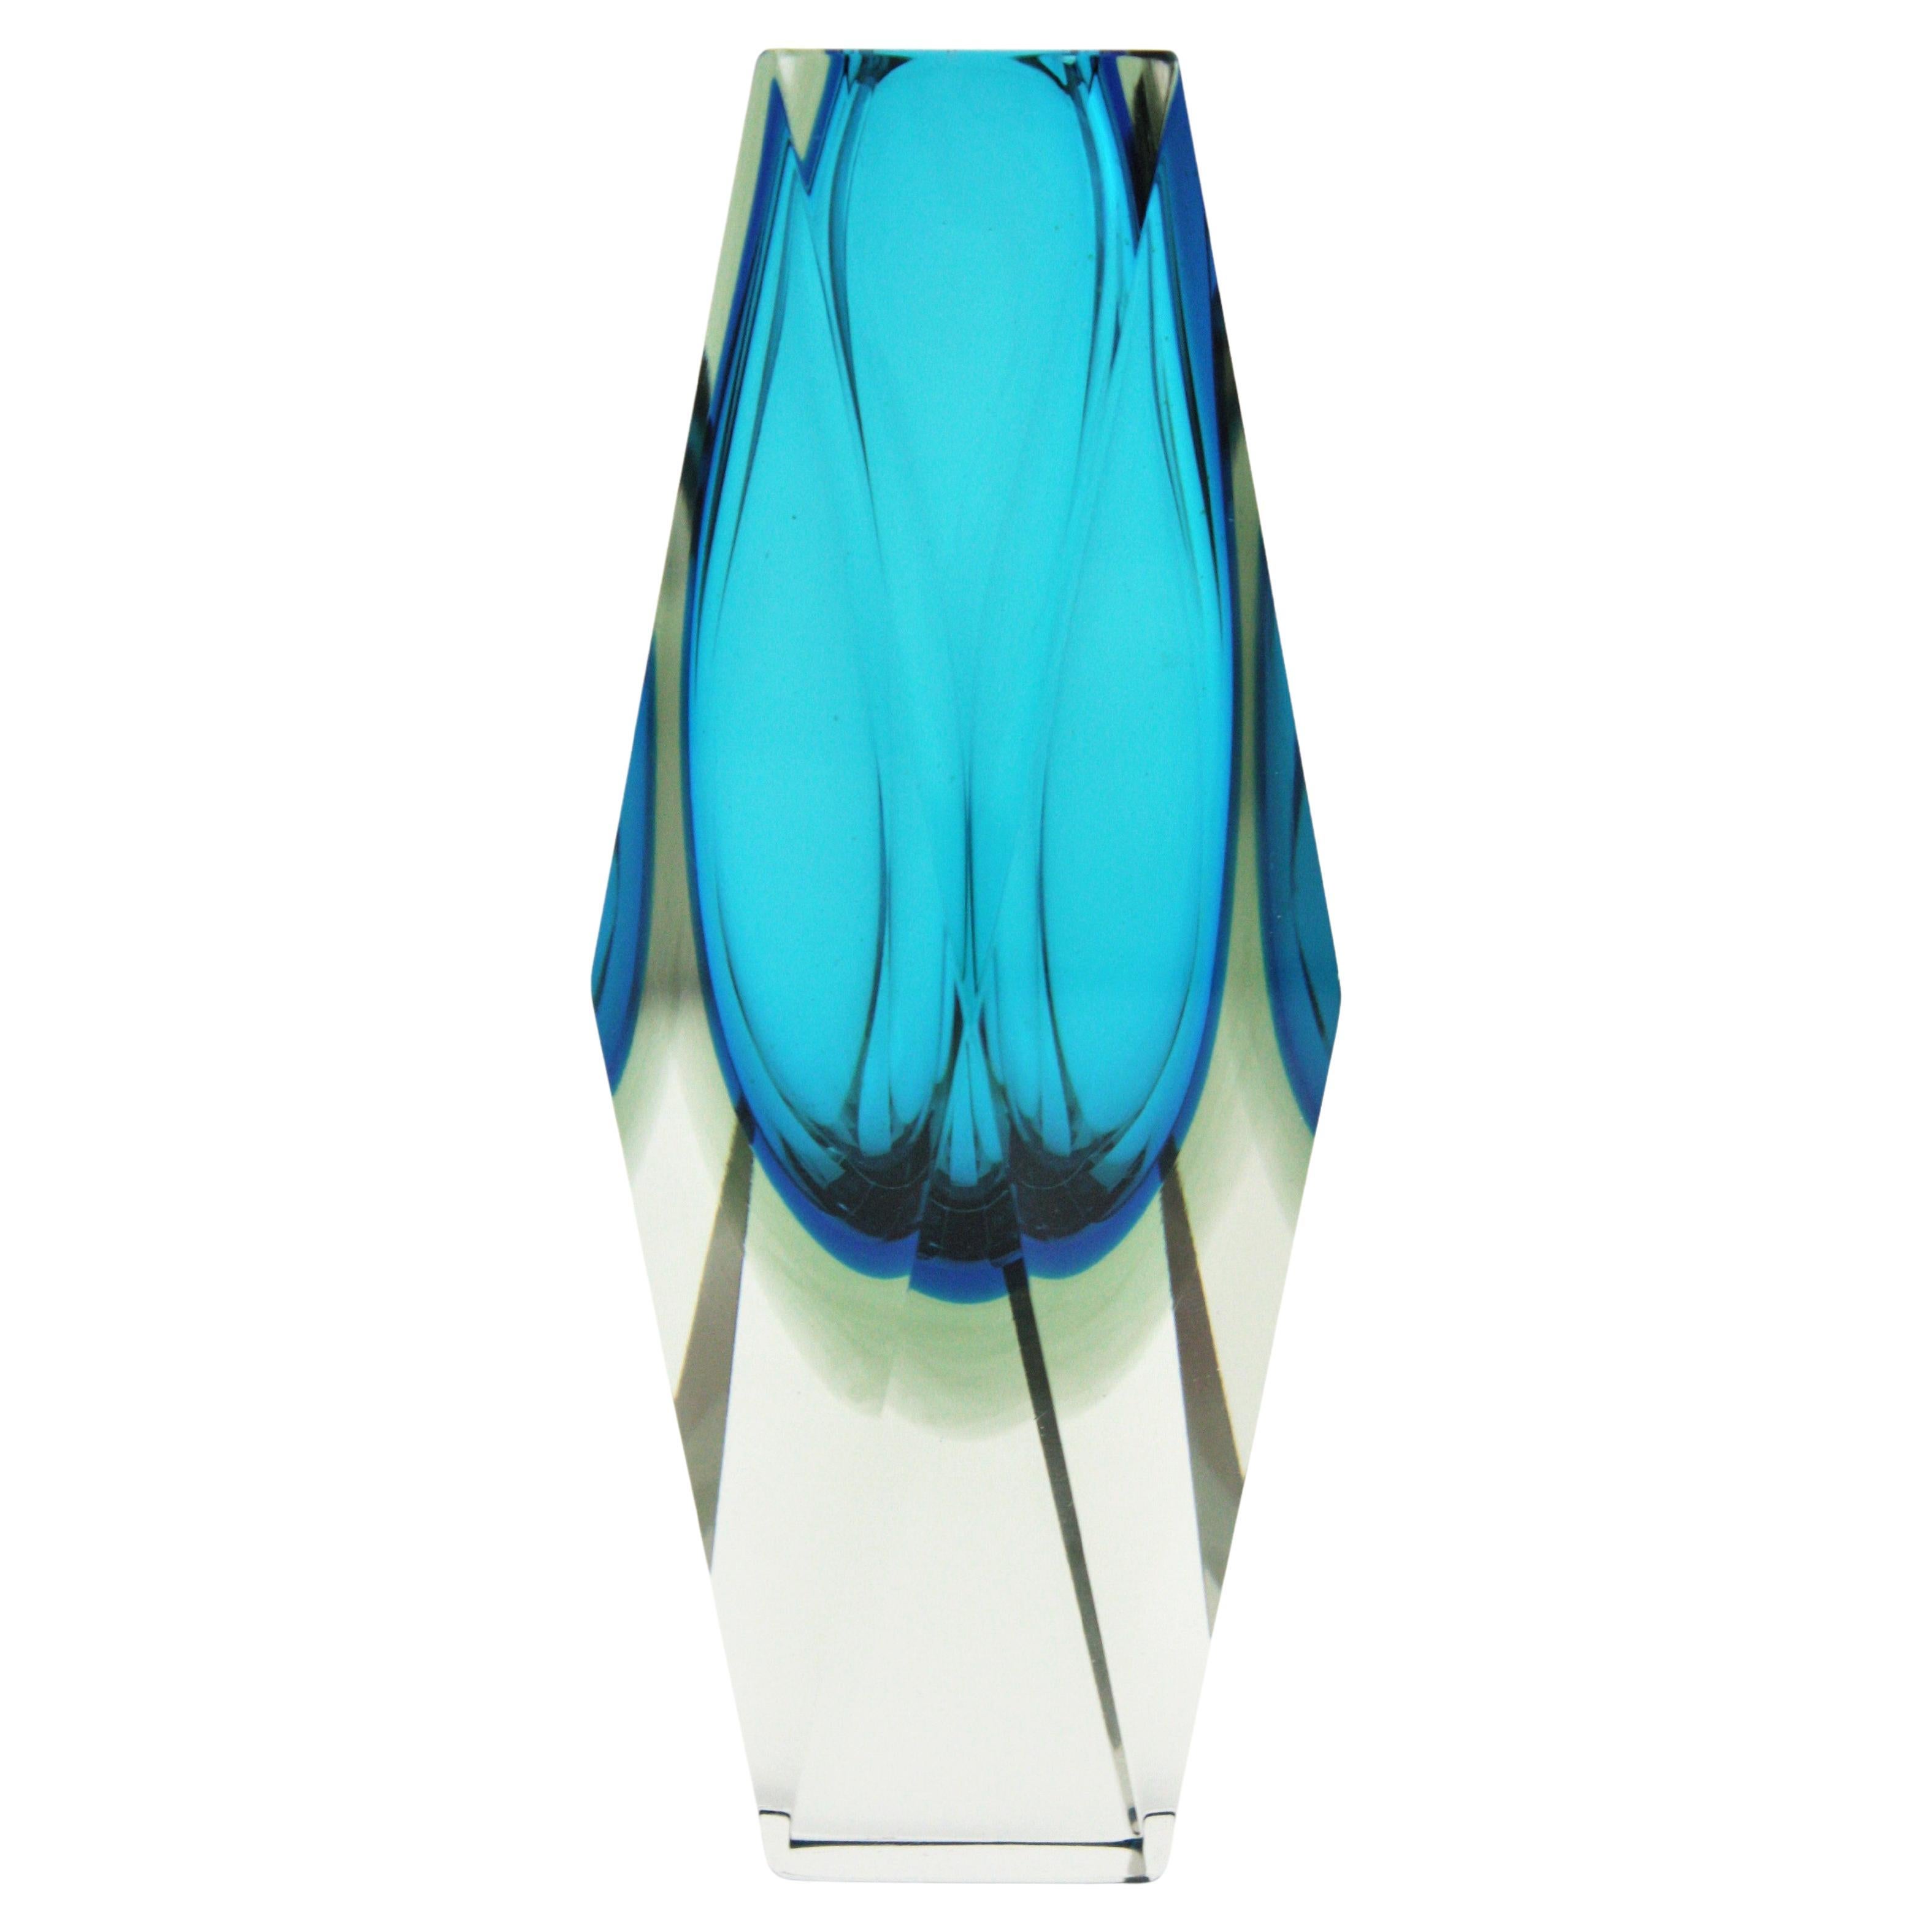 Mandruzzato Murano Blue Sommerso Faceted Art Glass Vase